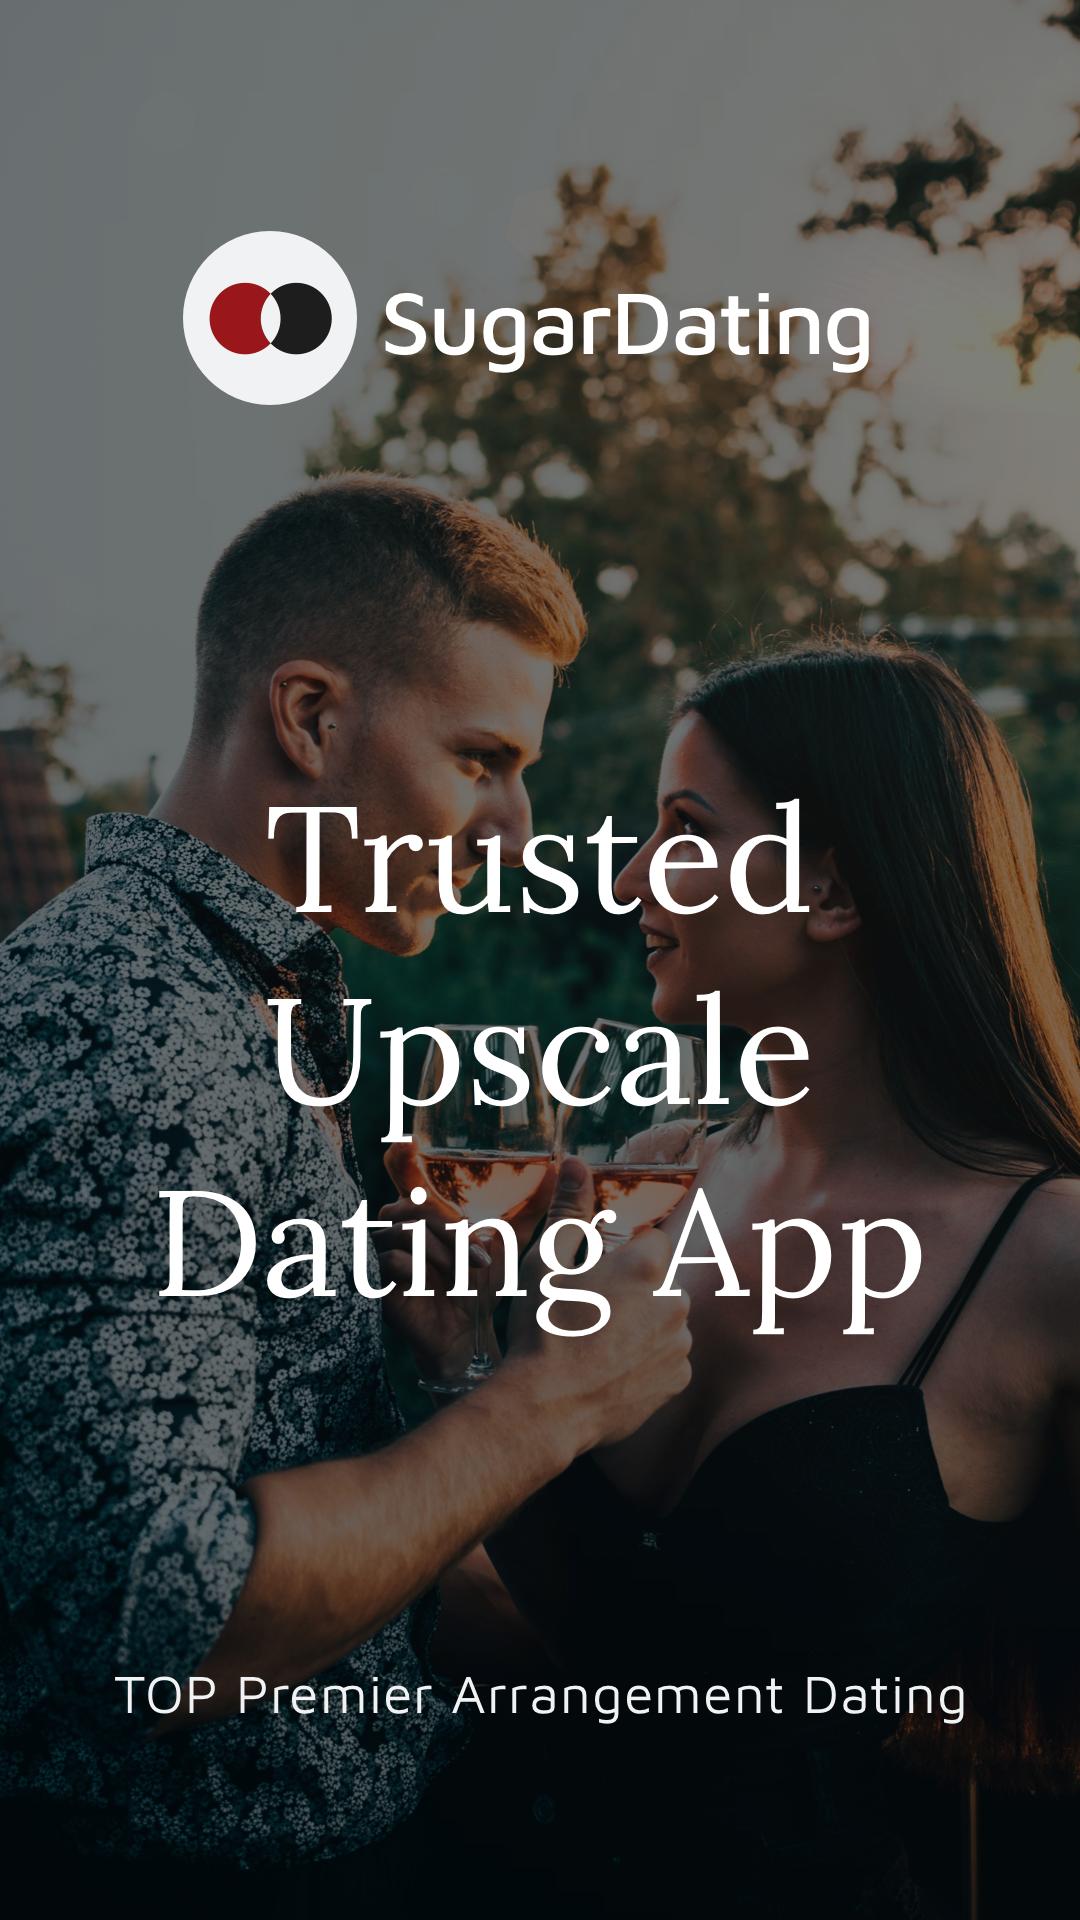 Sugar Daddy Dating & Seeking Arrangement Elite App 1.0.46 Screenshot 1